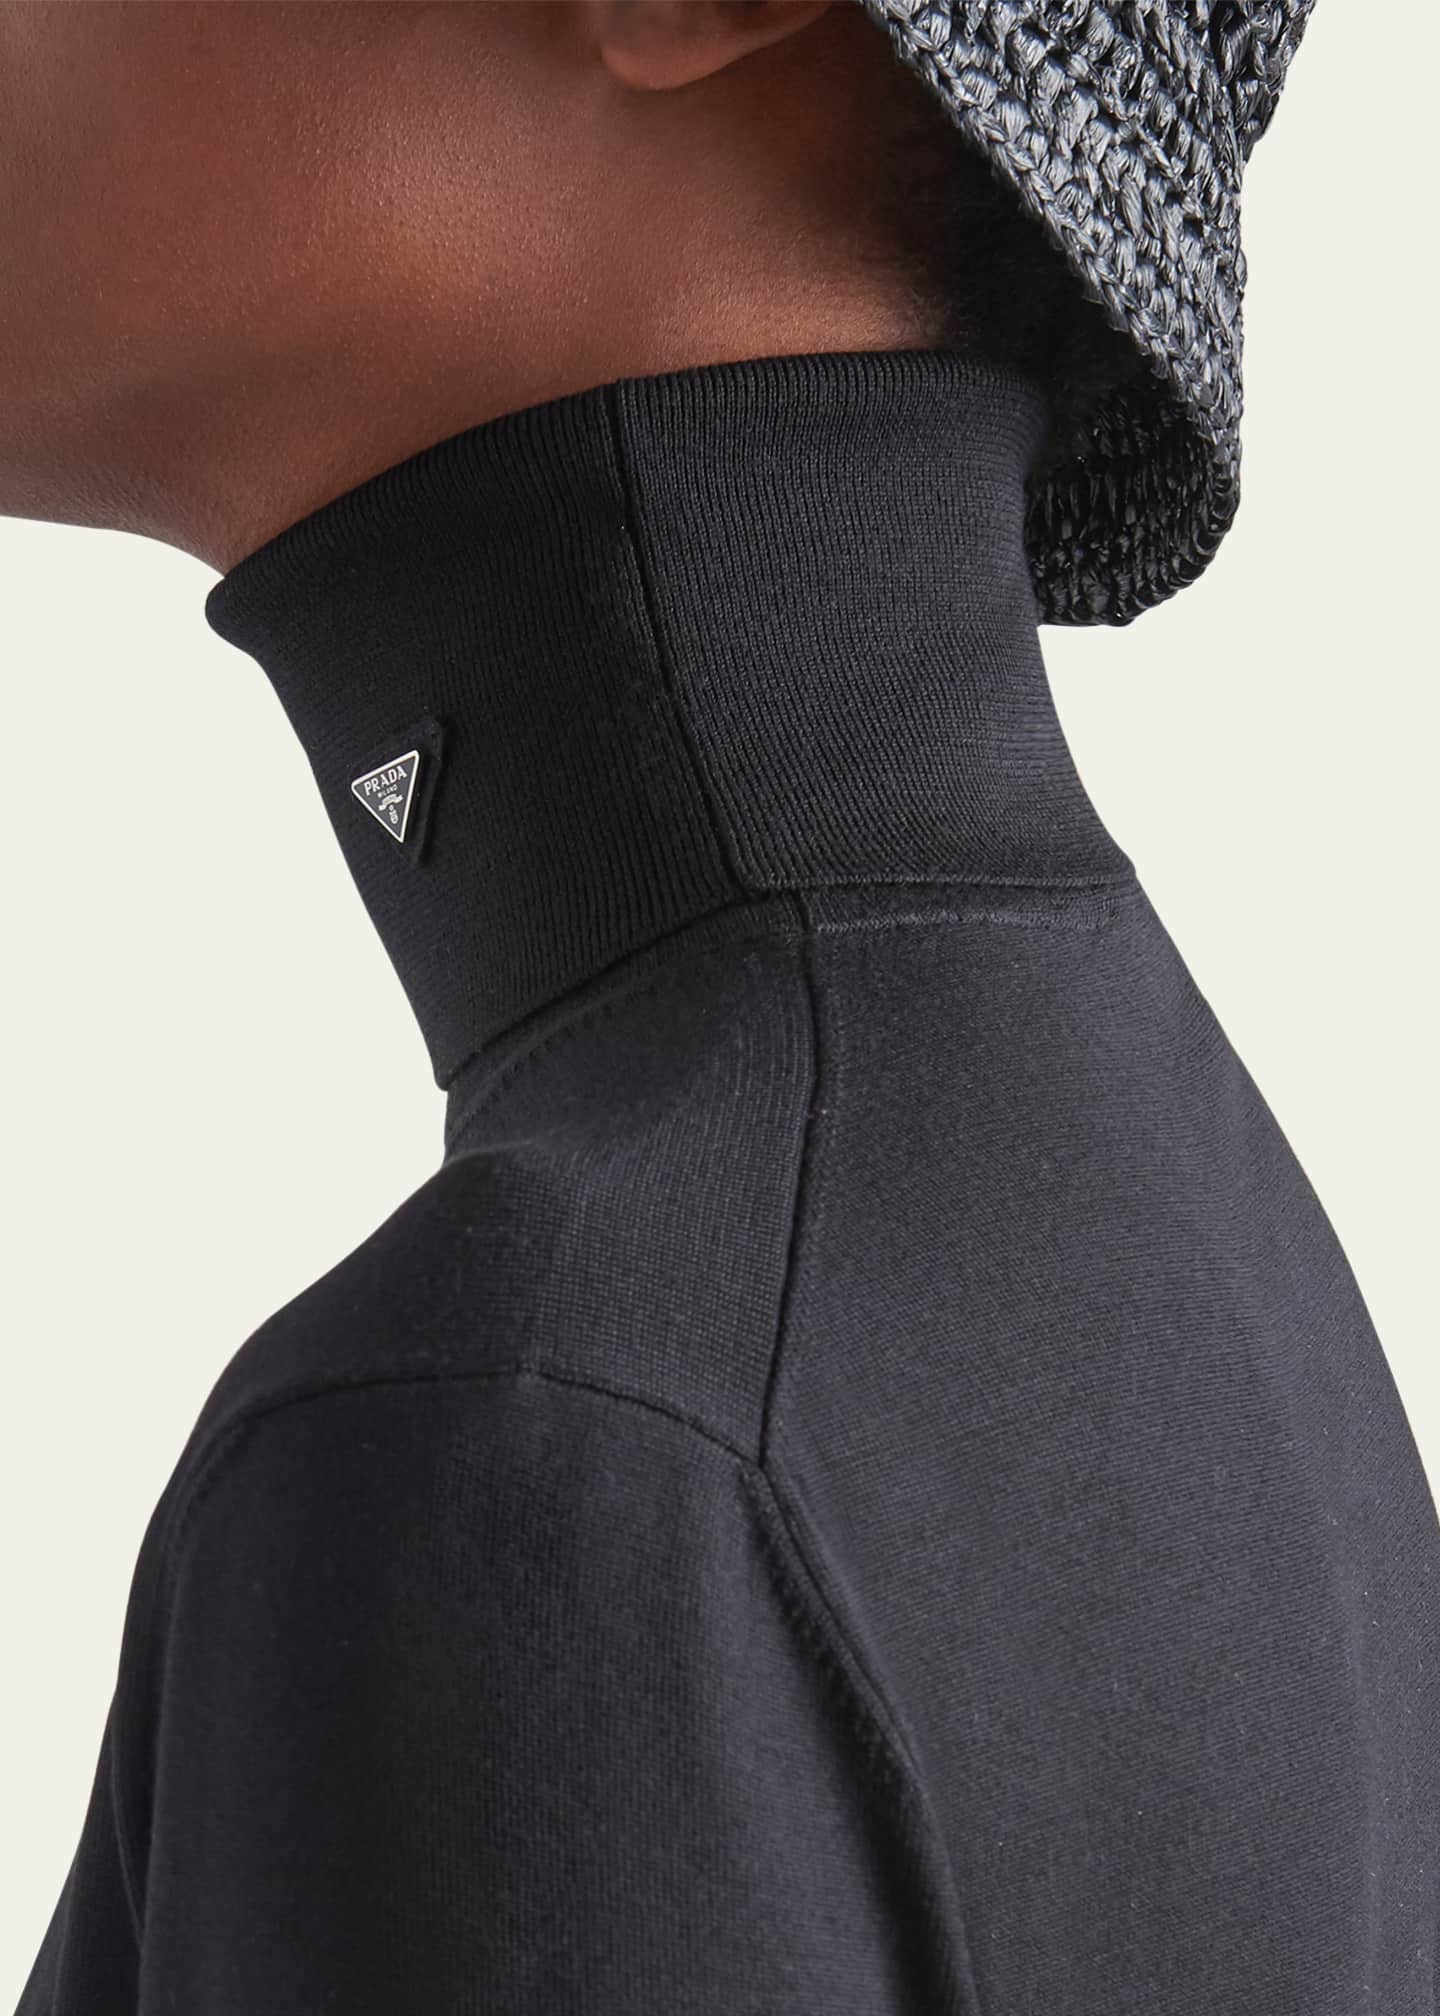 Prada Superfine Wool Turtleneck Sweater - Bergdorf Goodman